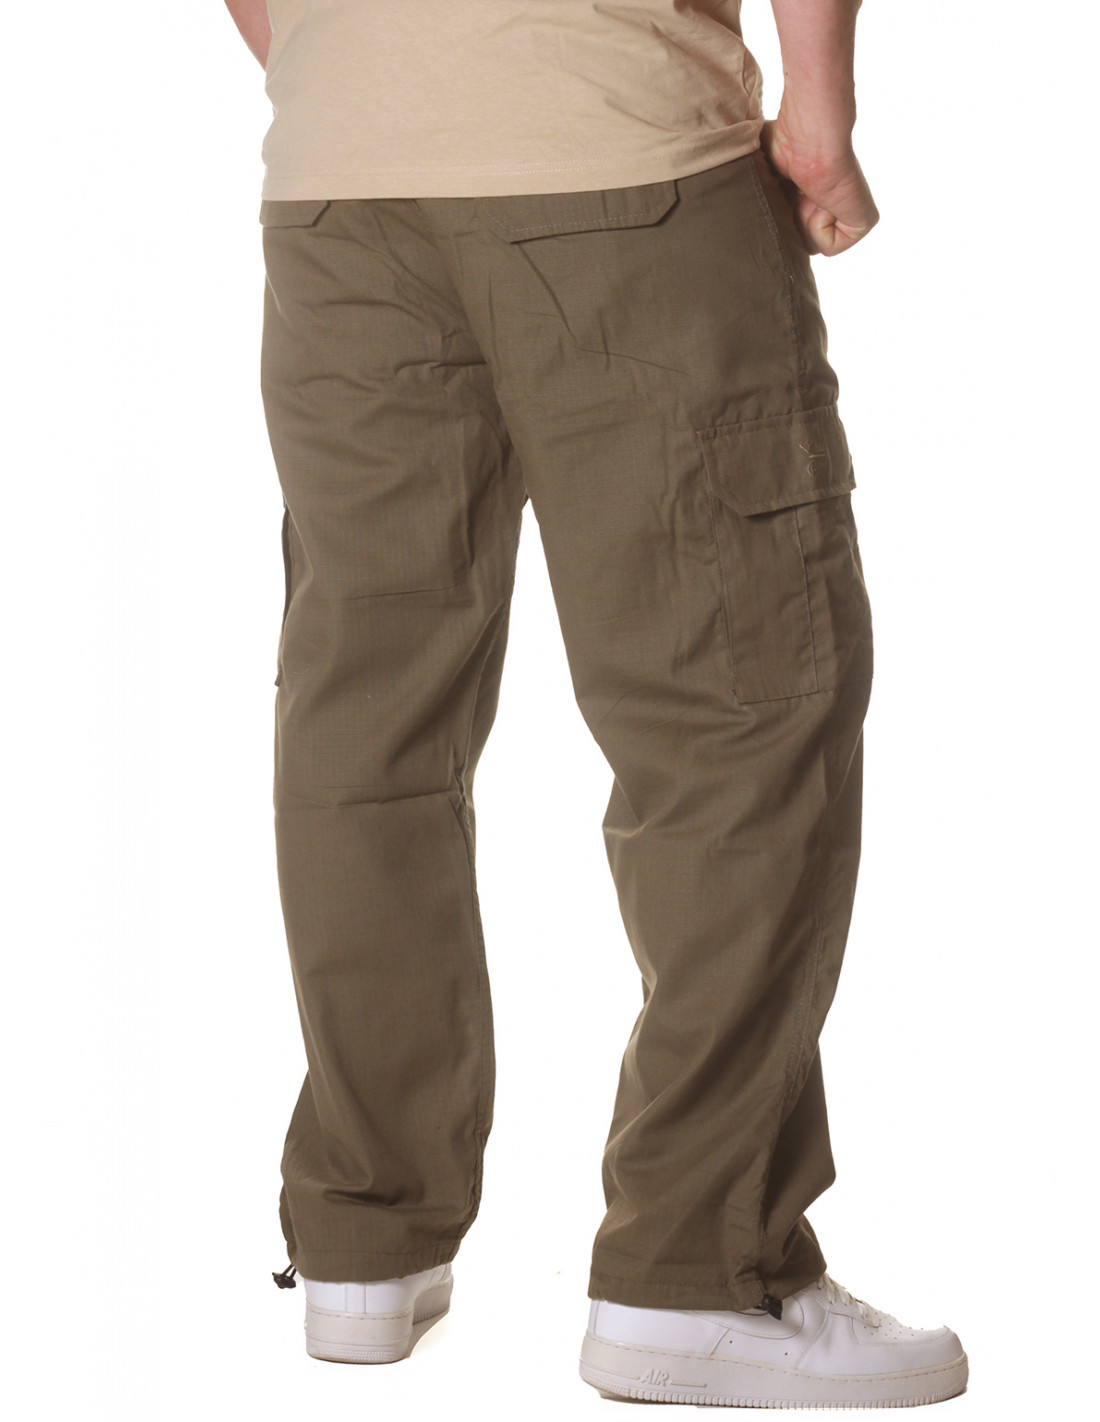 BSAT Combat Cargo Pants Light Green Baggy Fit